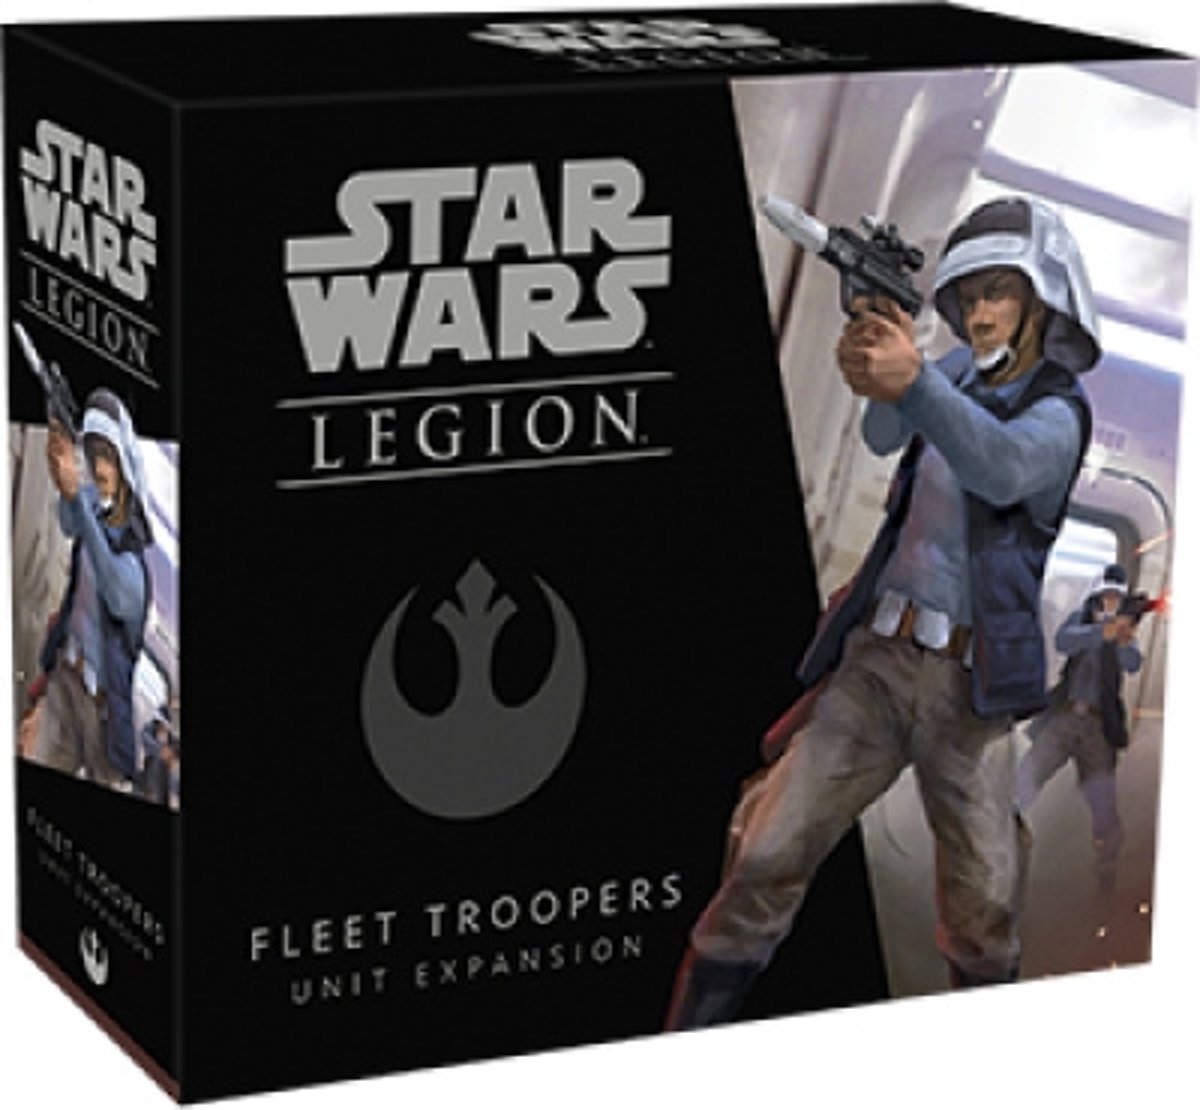 Star Wars Legion Fleet Troopers Unit